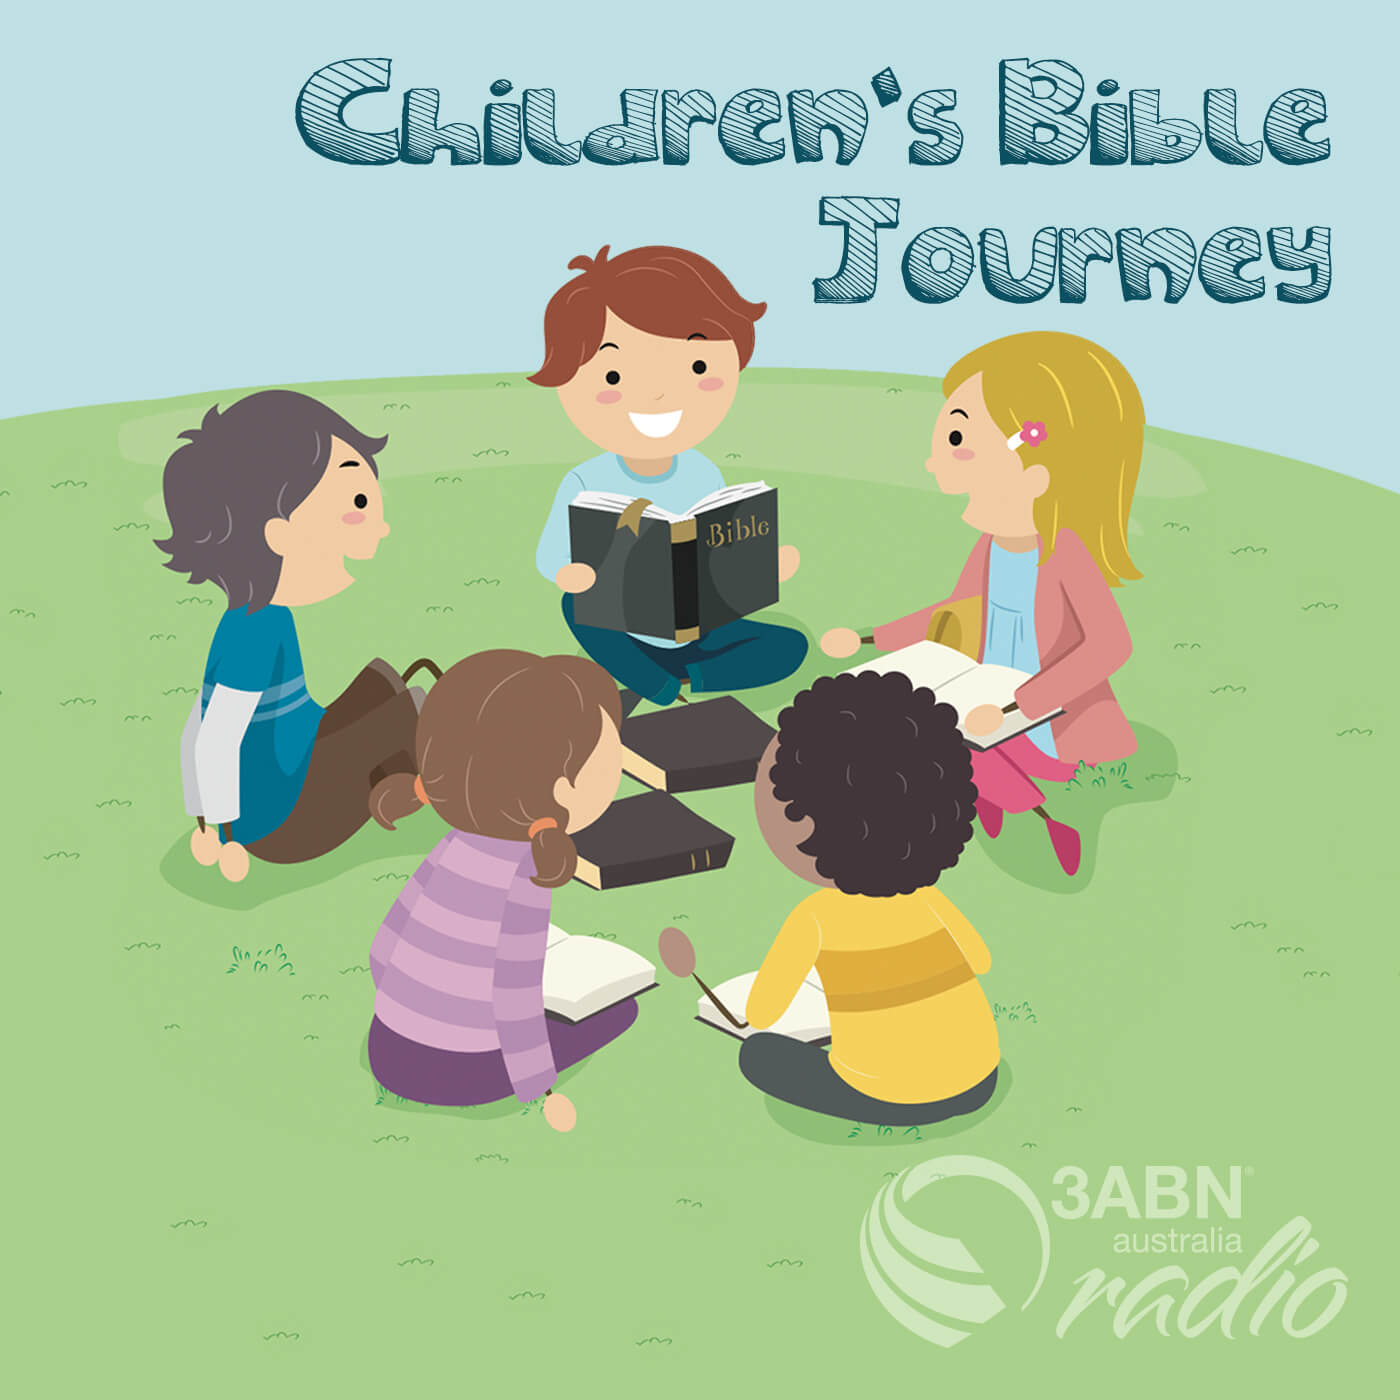 Children's Bible Journey - 2122